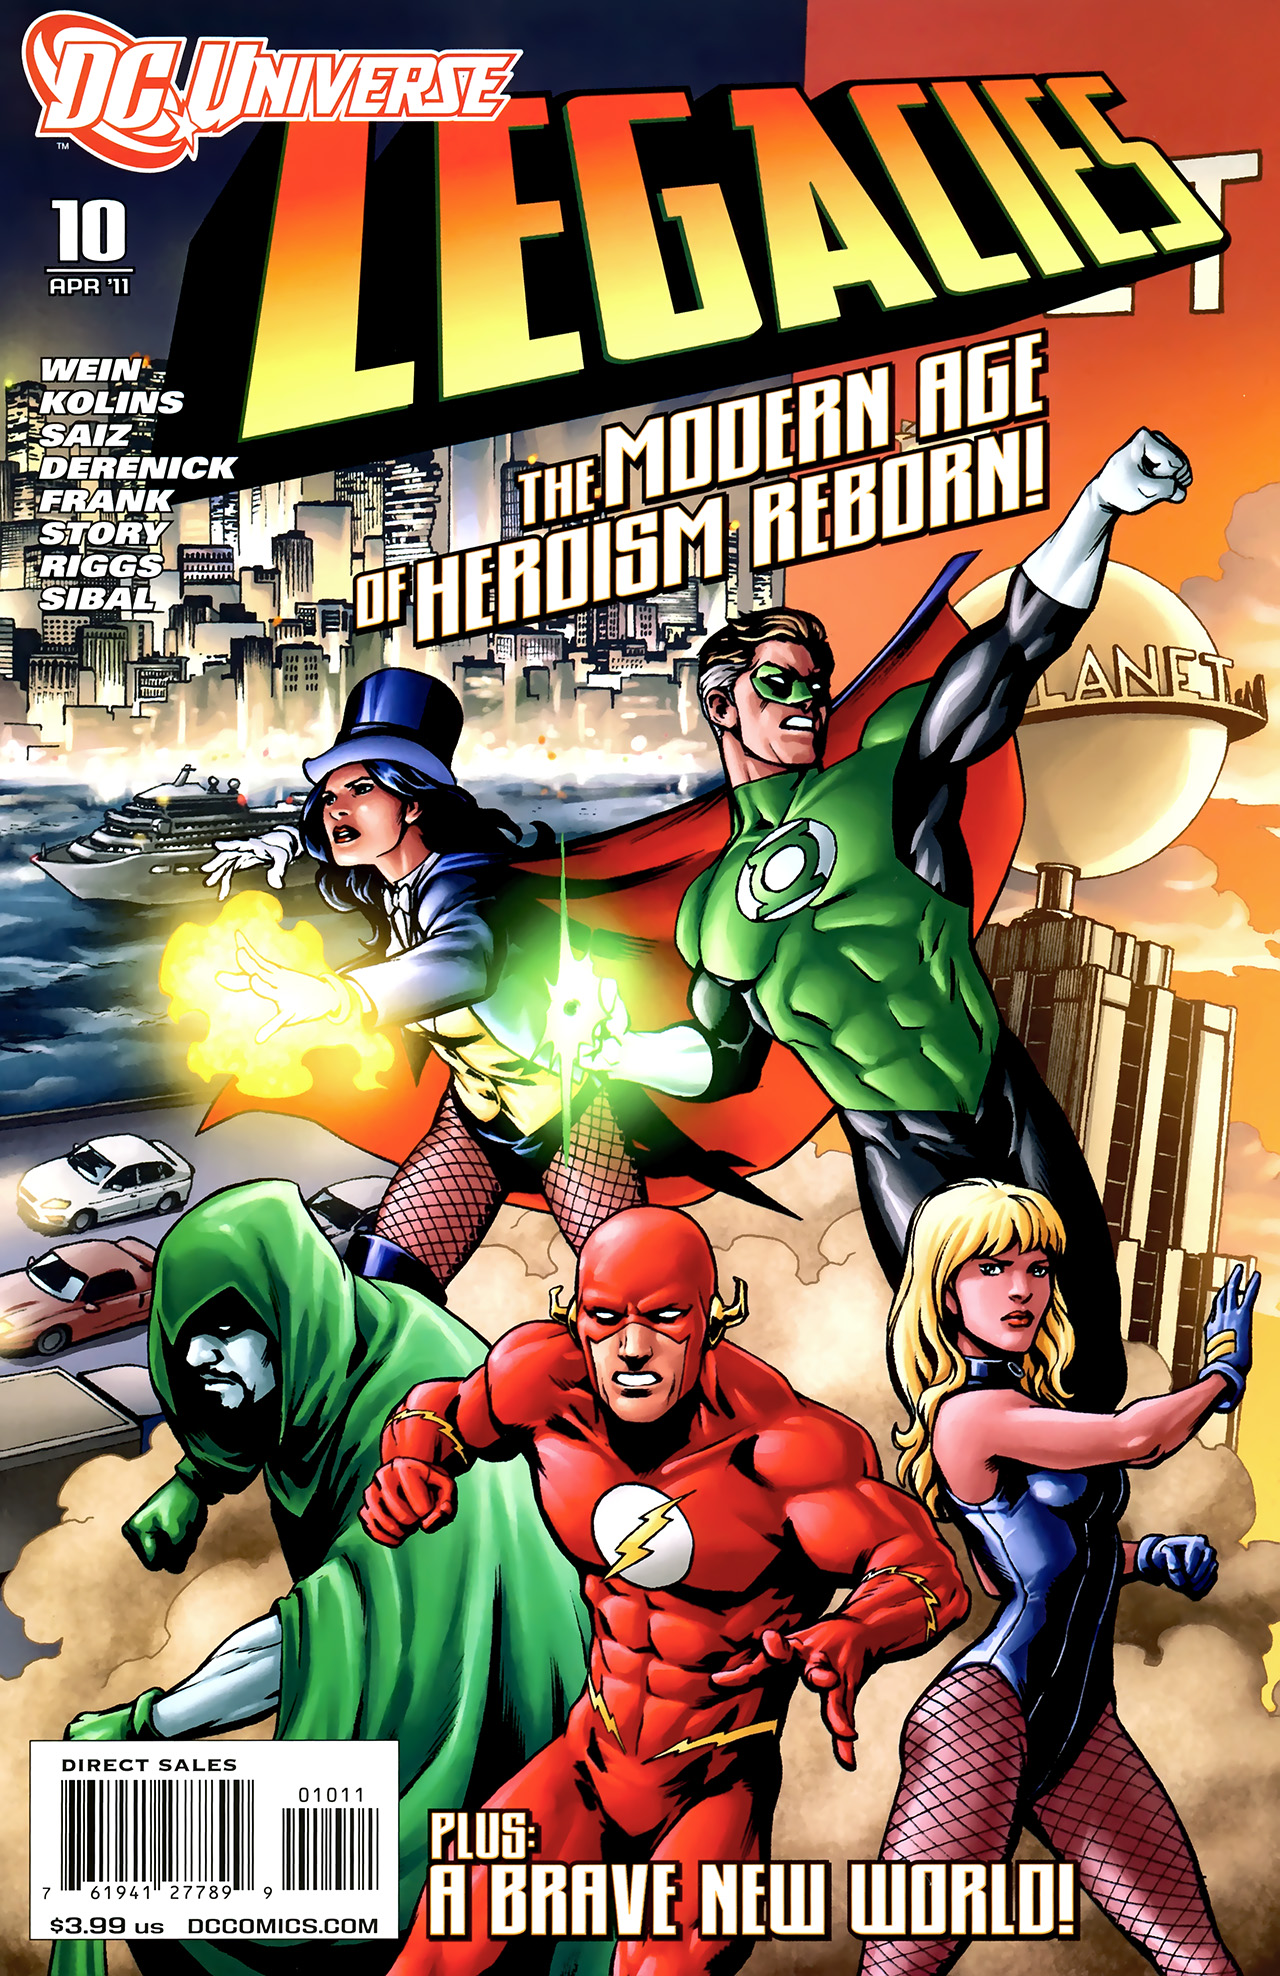 Dcu Legacies Issue 10 | Read Dcu Legacies Issue 10 comic online in high  quality. Read Full Comic online for free - Read comics online in high  quality .